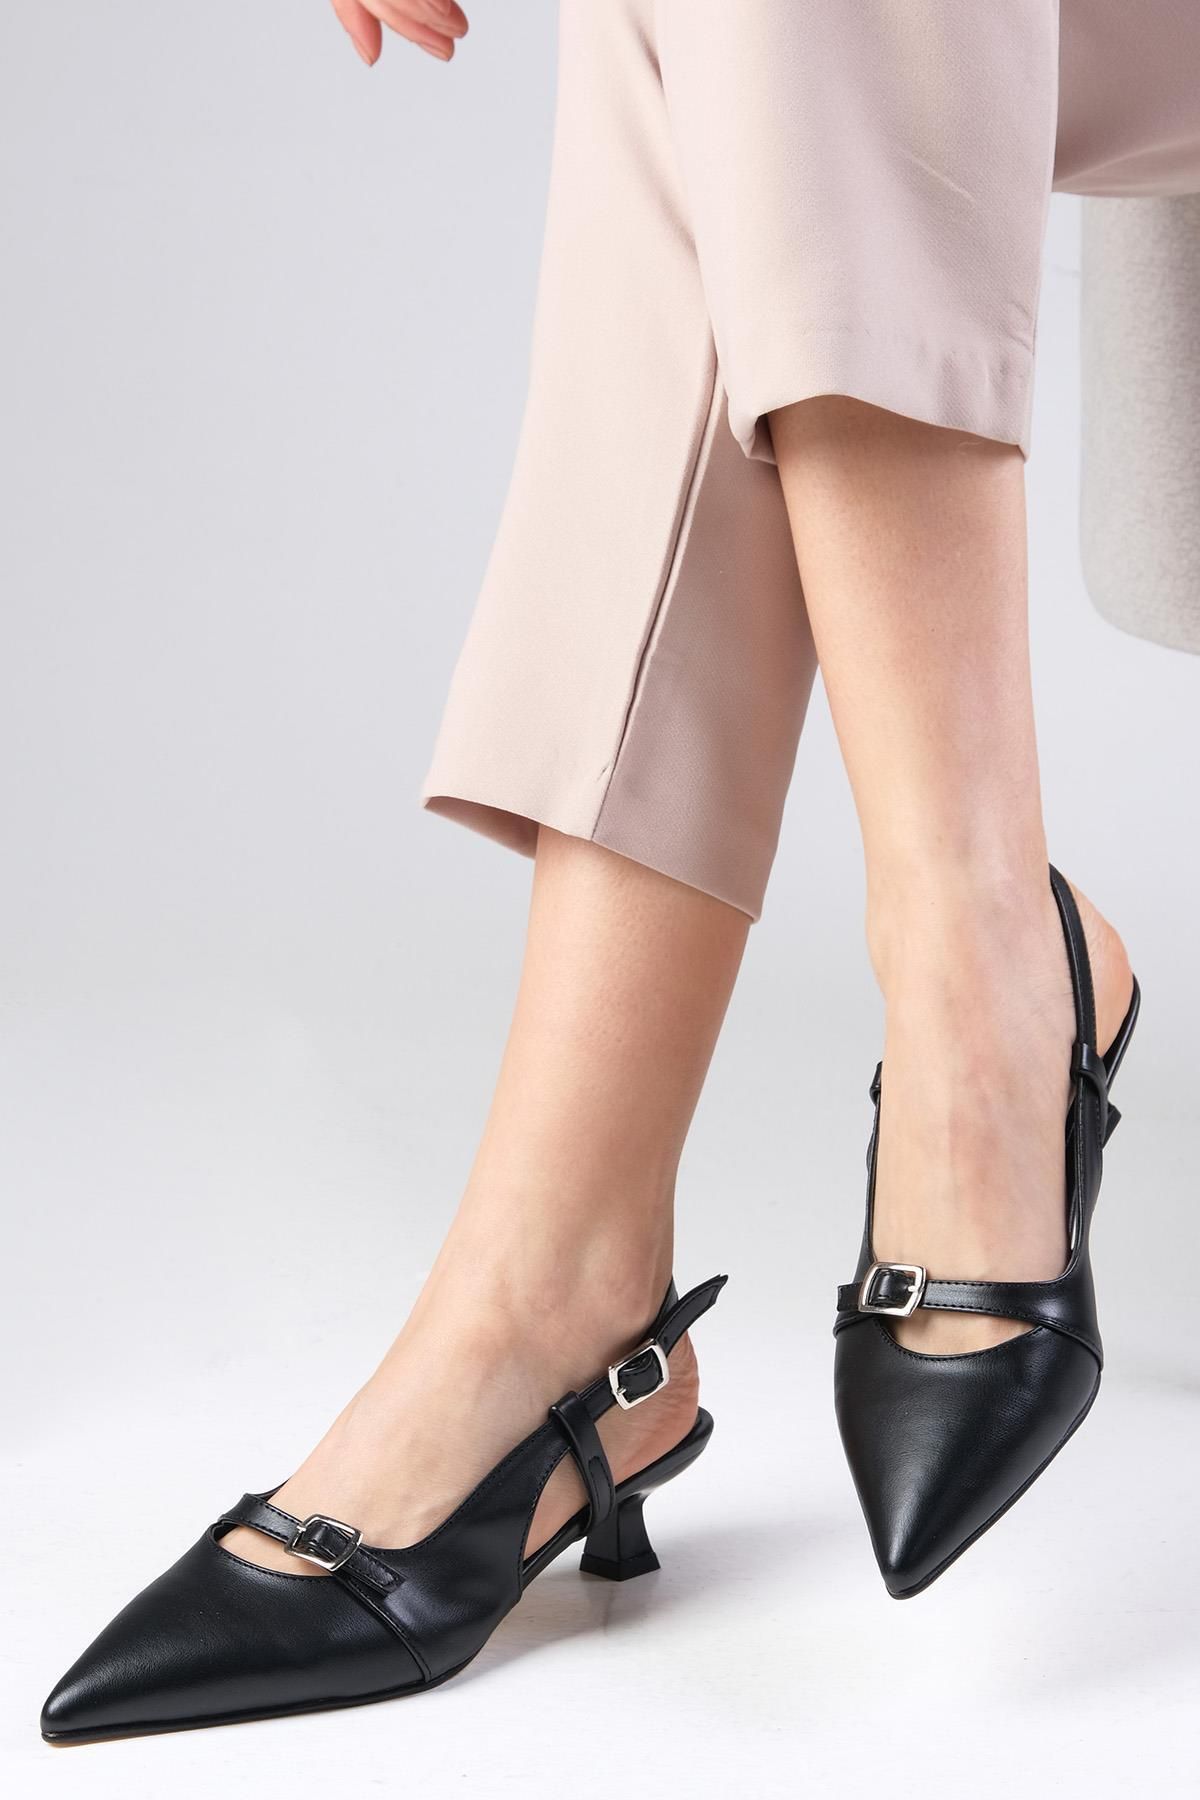 Mio Gusto Kristin Siyah Renk Kısa Topuklu Kadın Ayakkabı